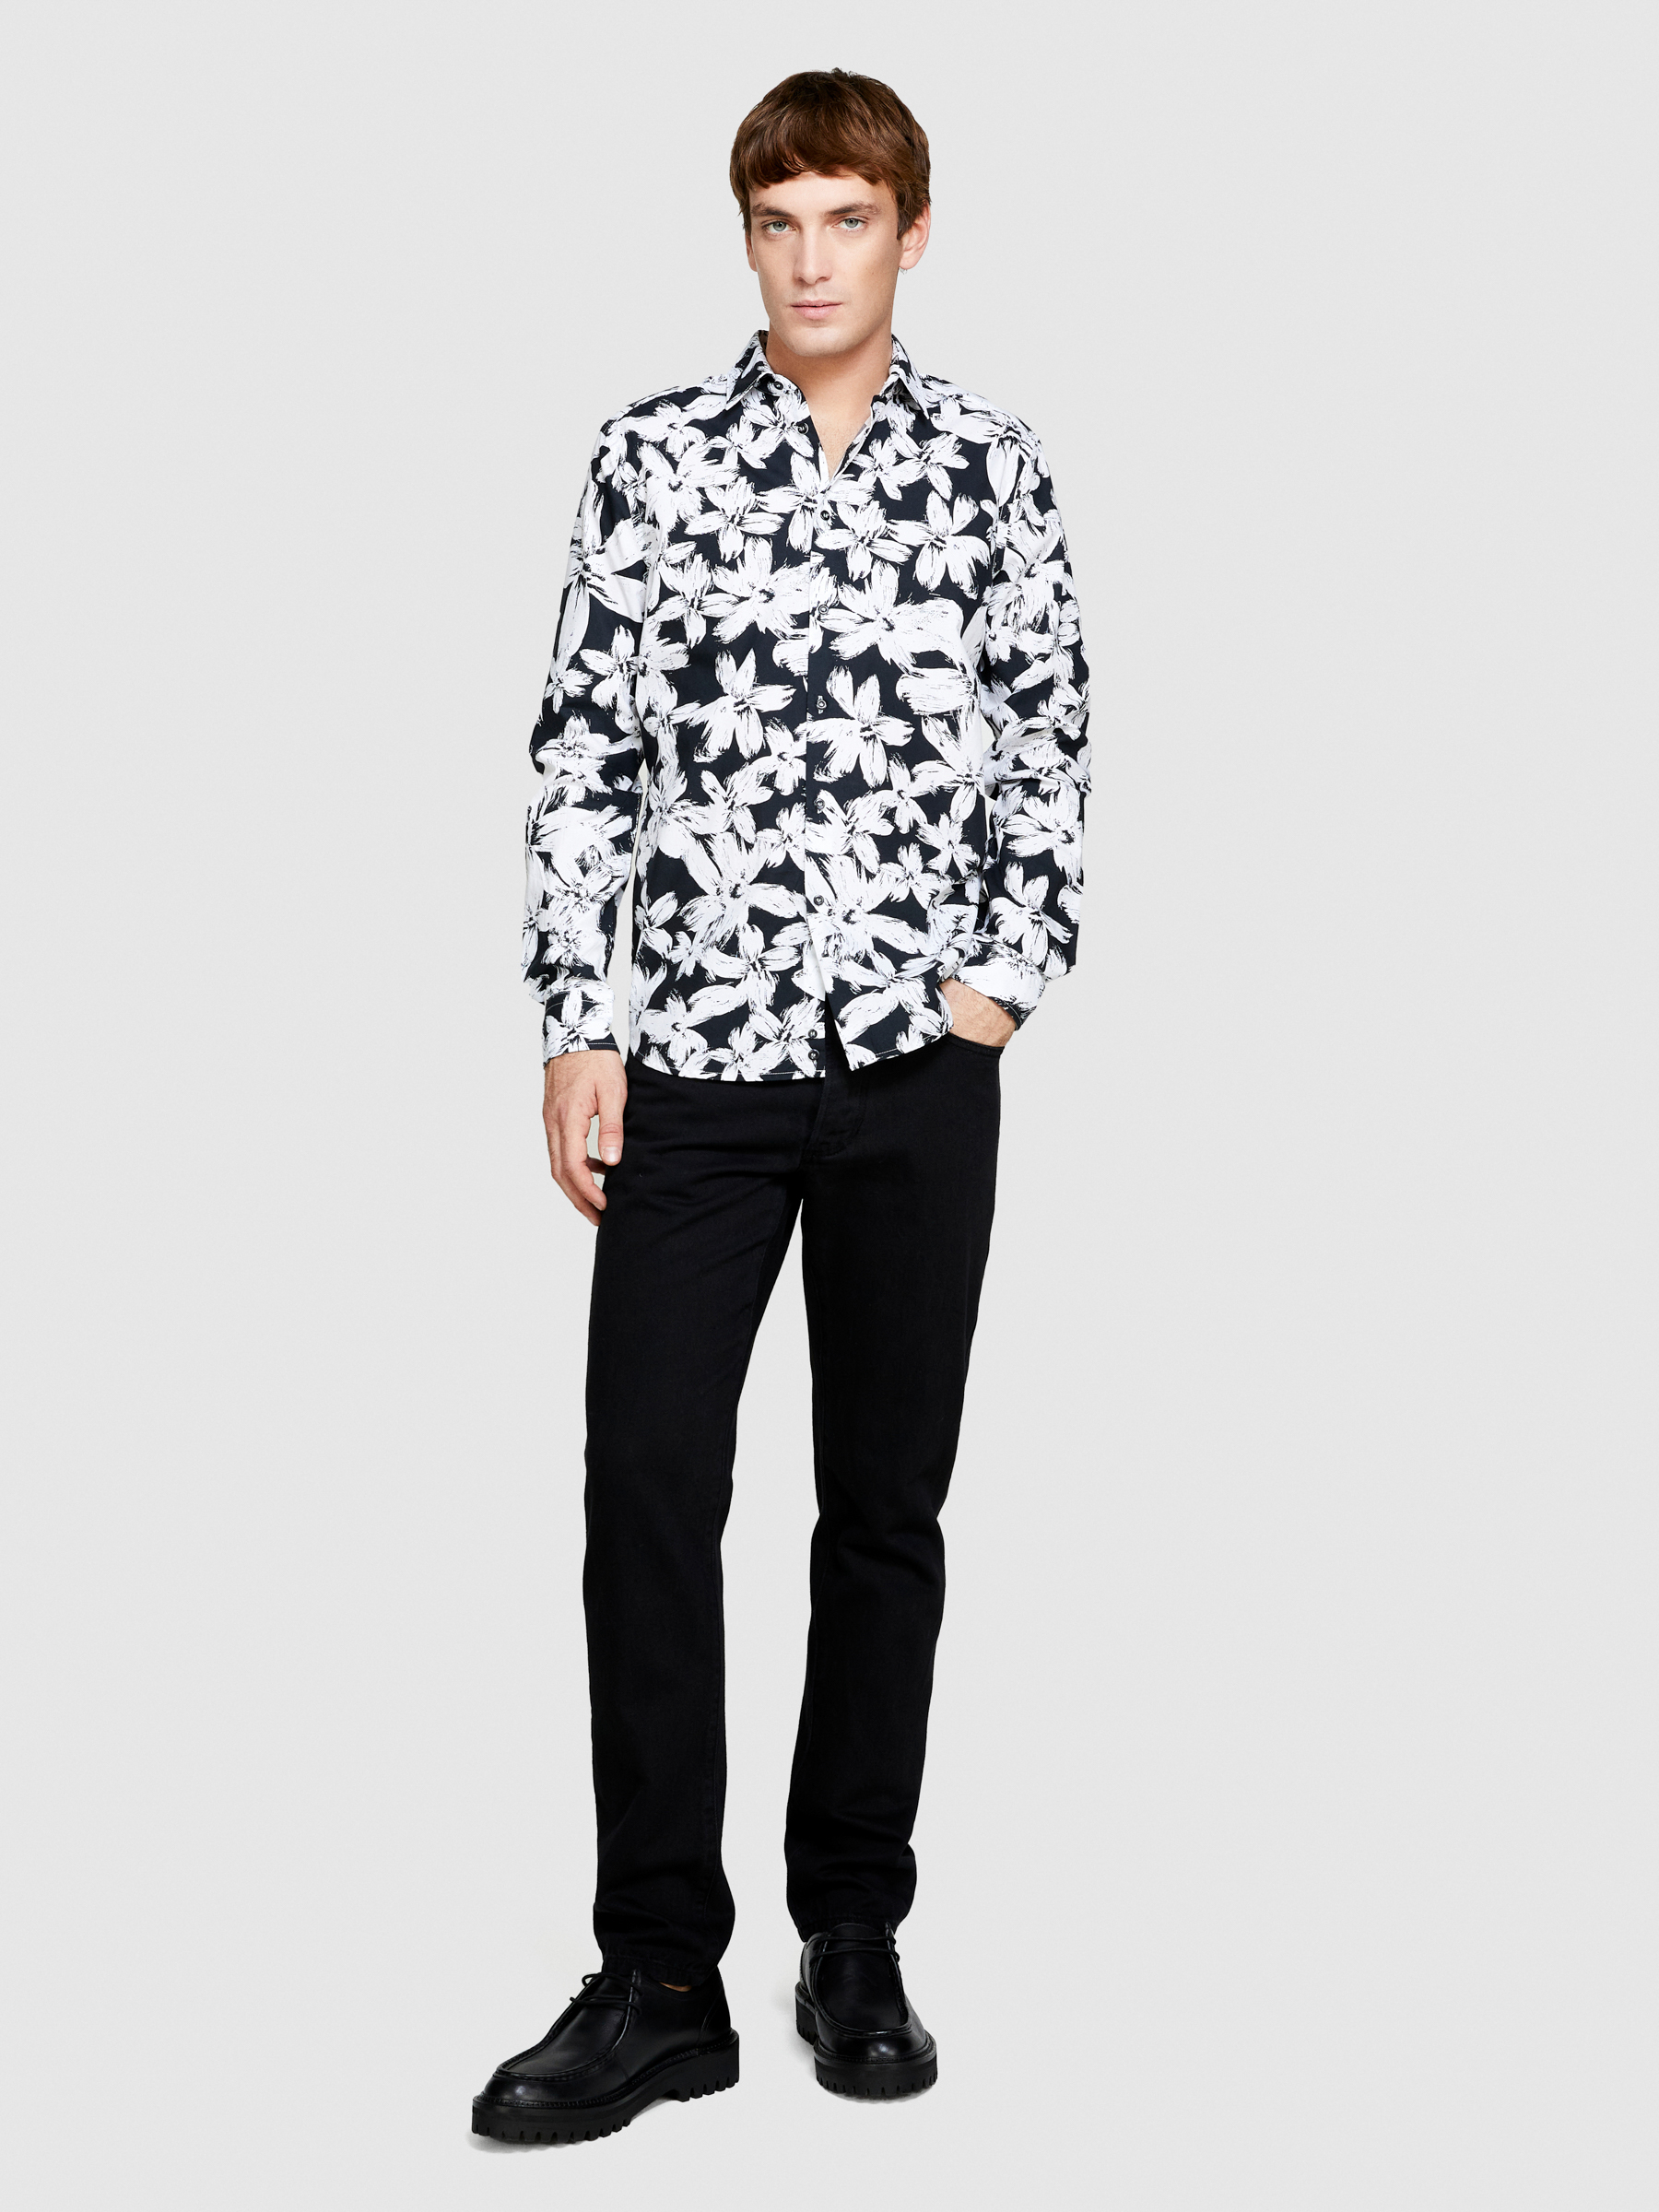 Sisley - Printed Shirt, Man, Black, Size: 39